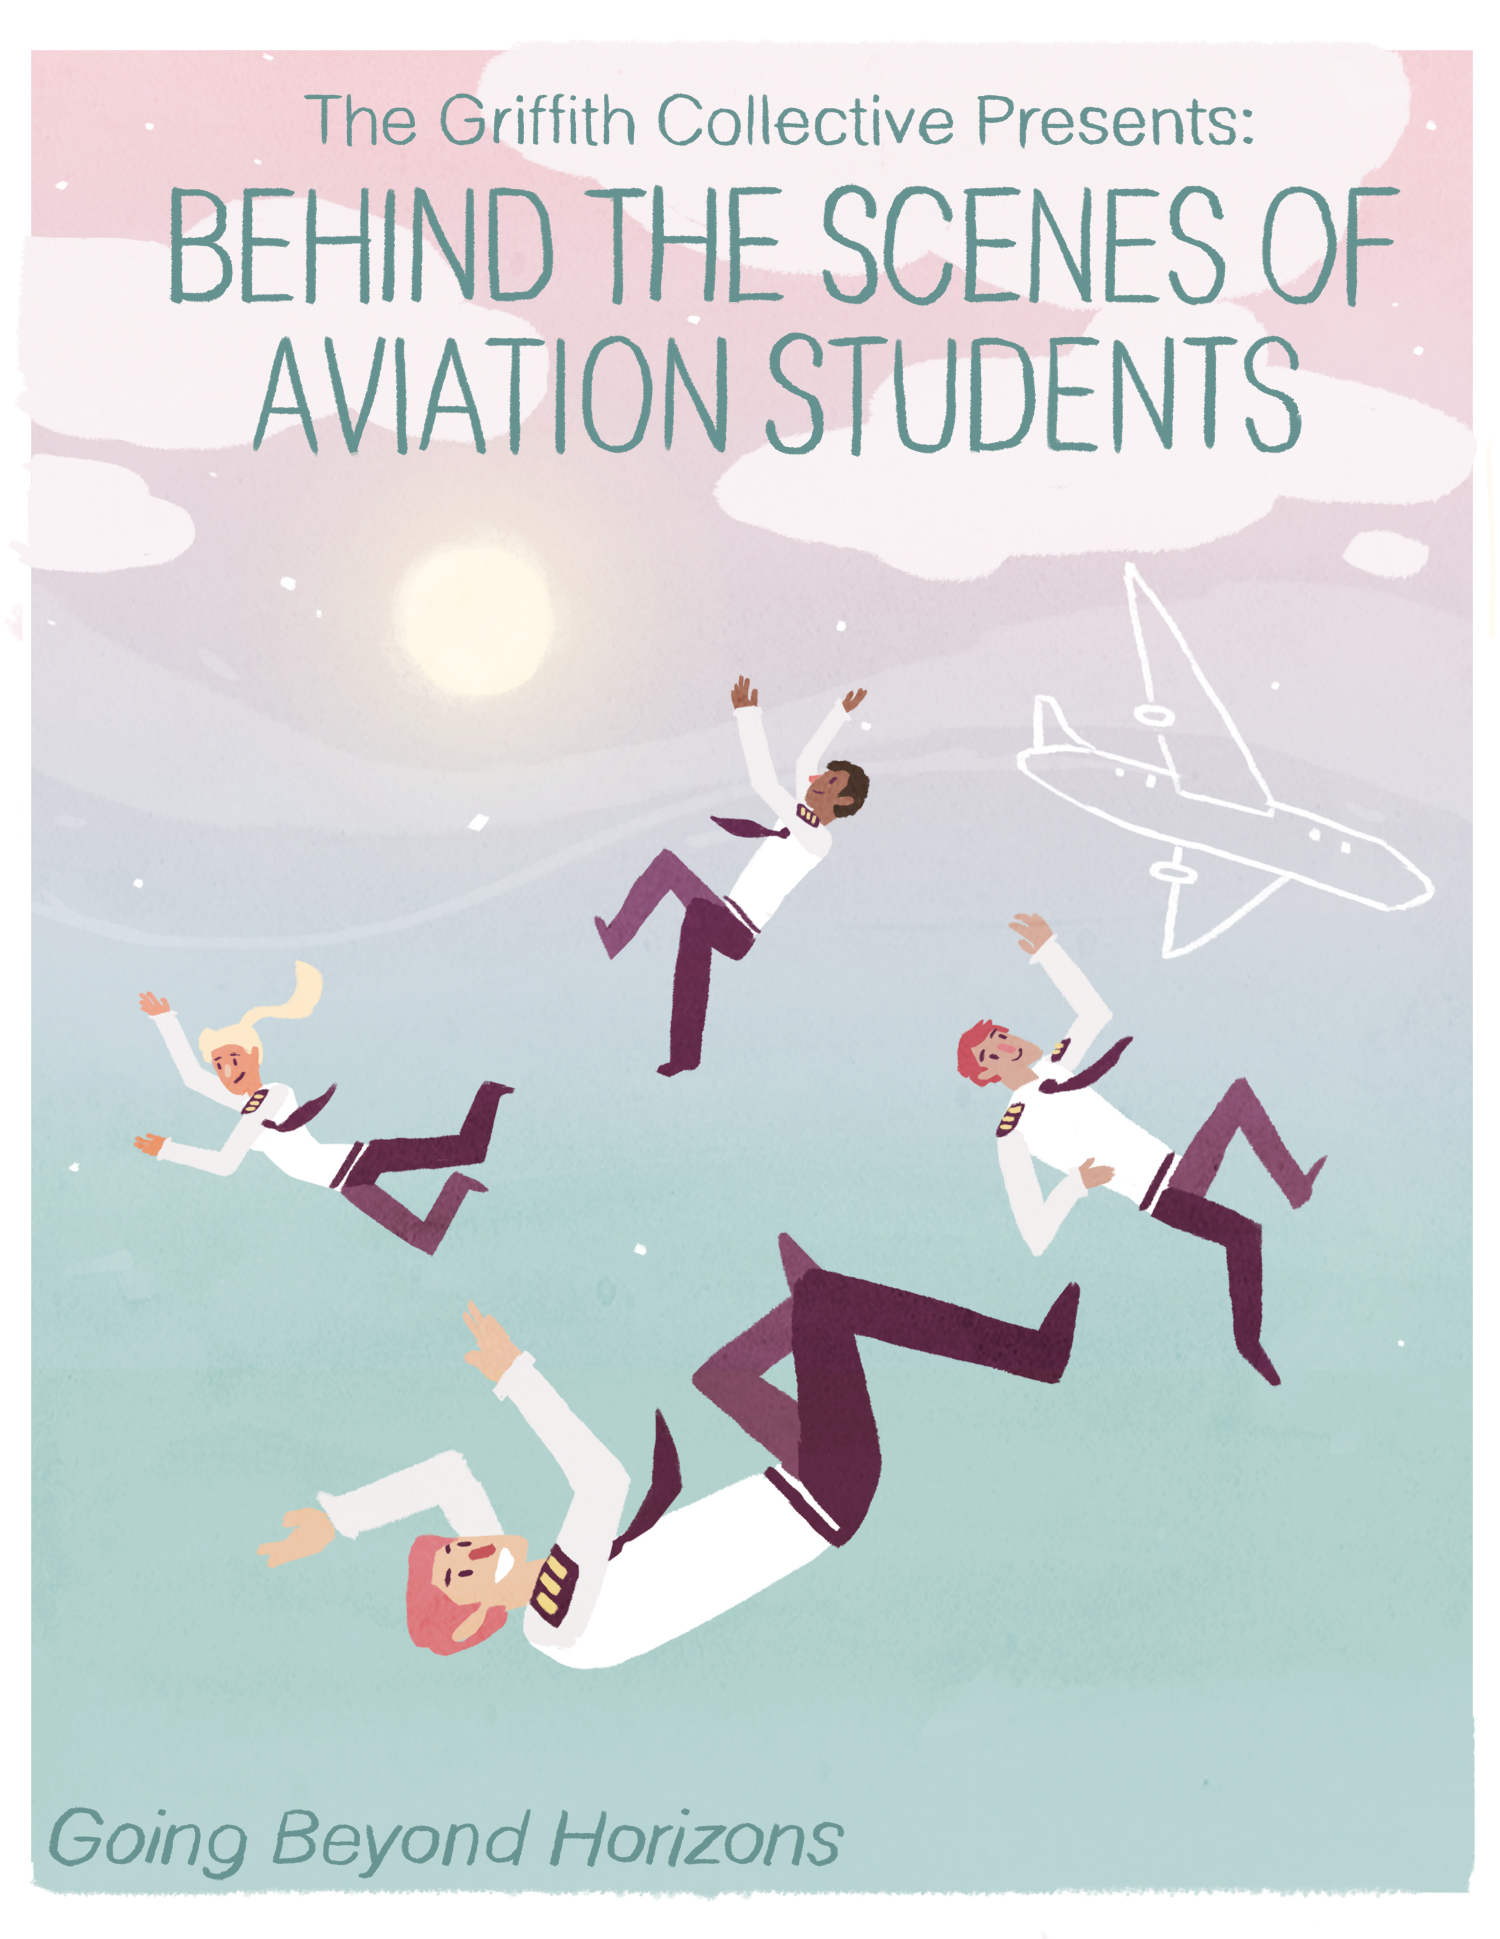 Aviation Students Illustration